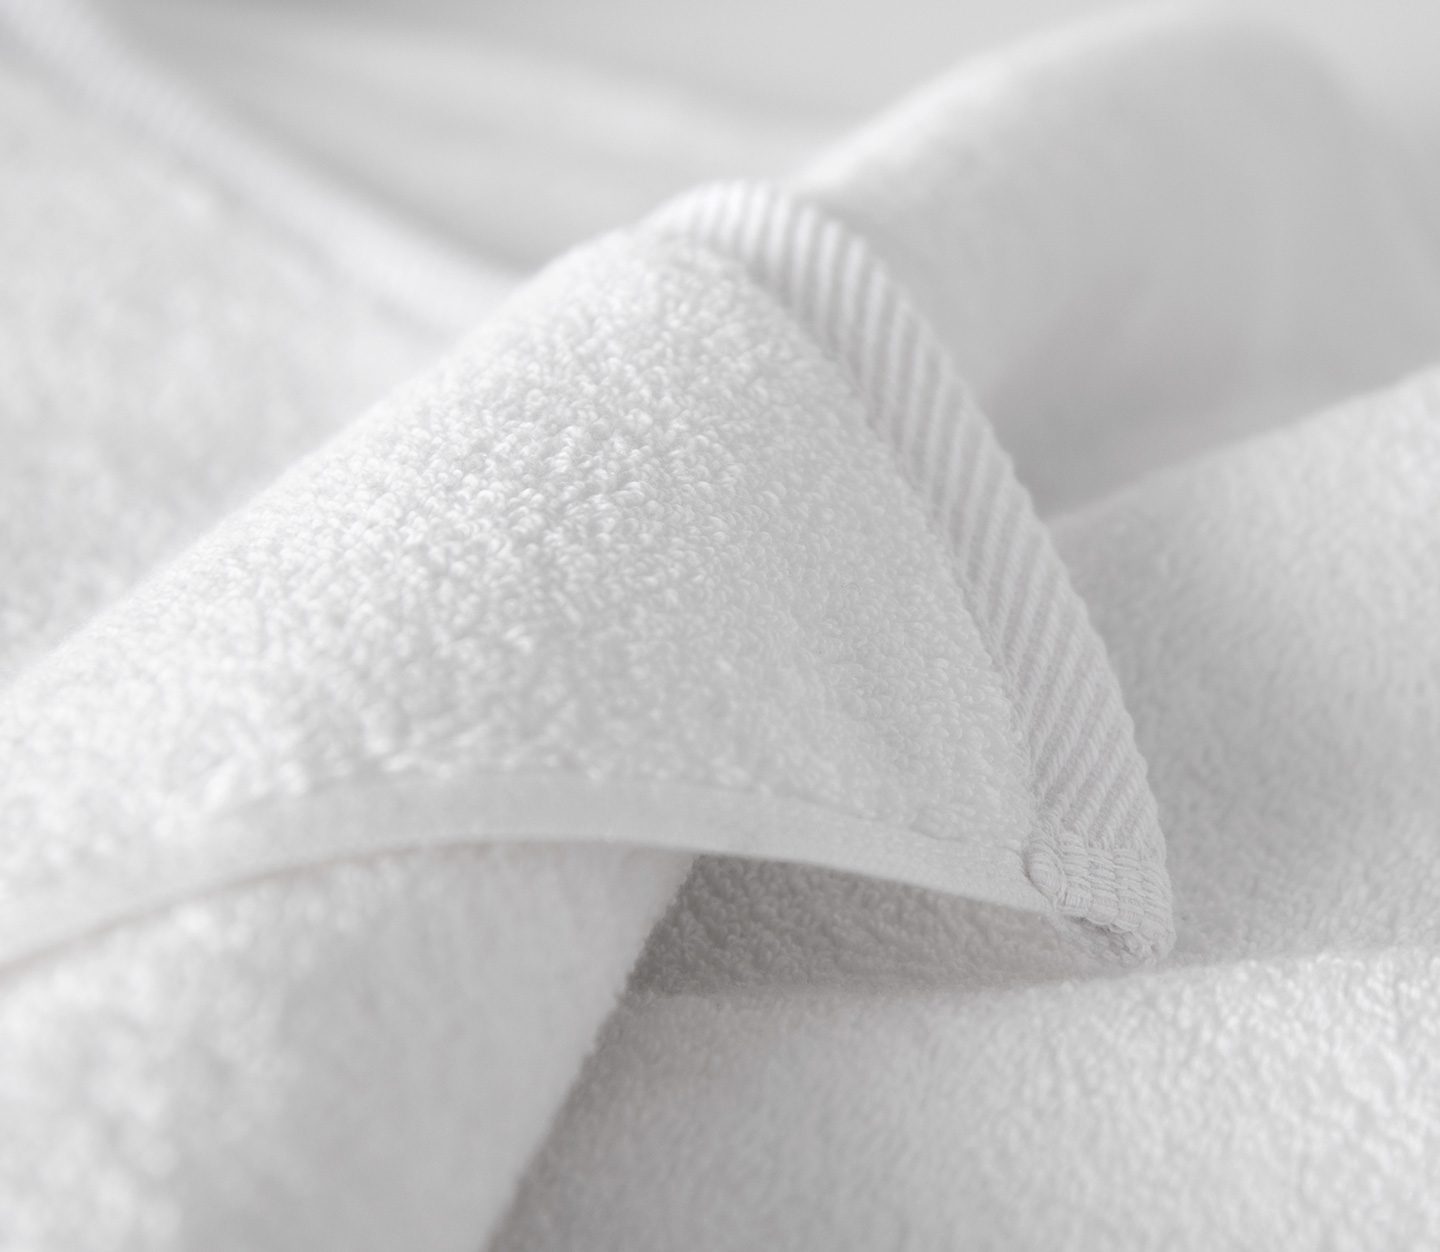 Quick-dry Towels (vidori), White, Hand Towel - Set Of 2 - Standard